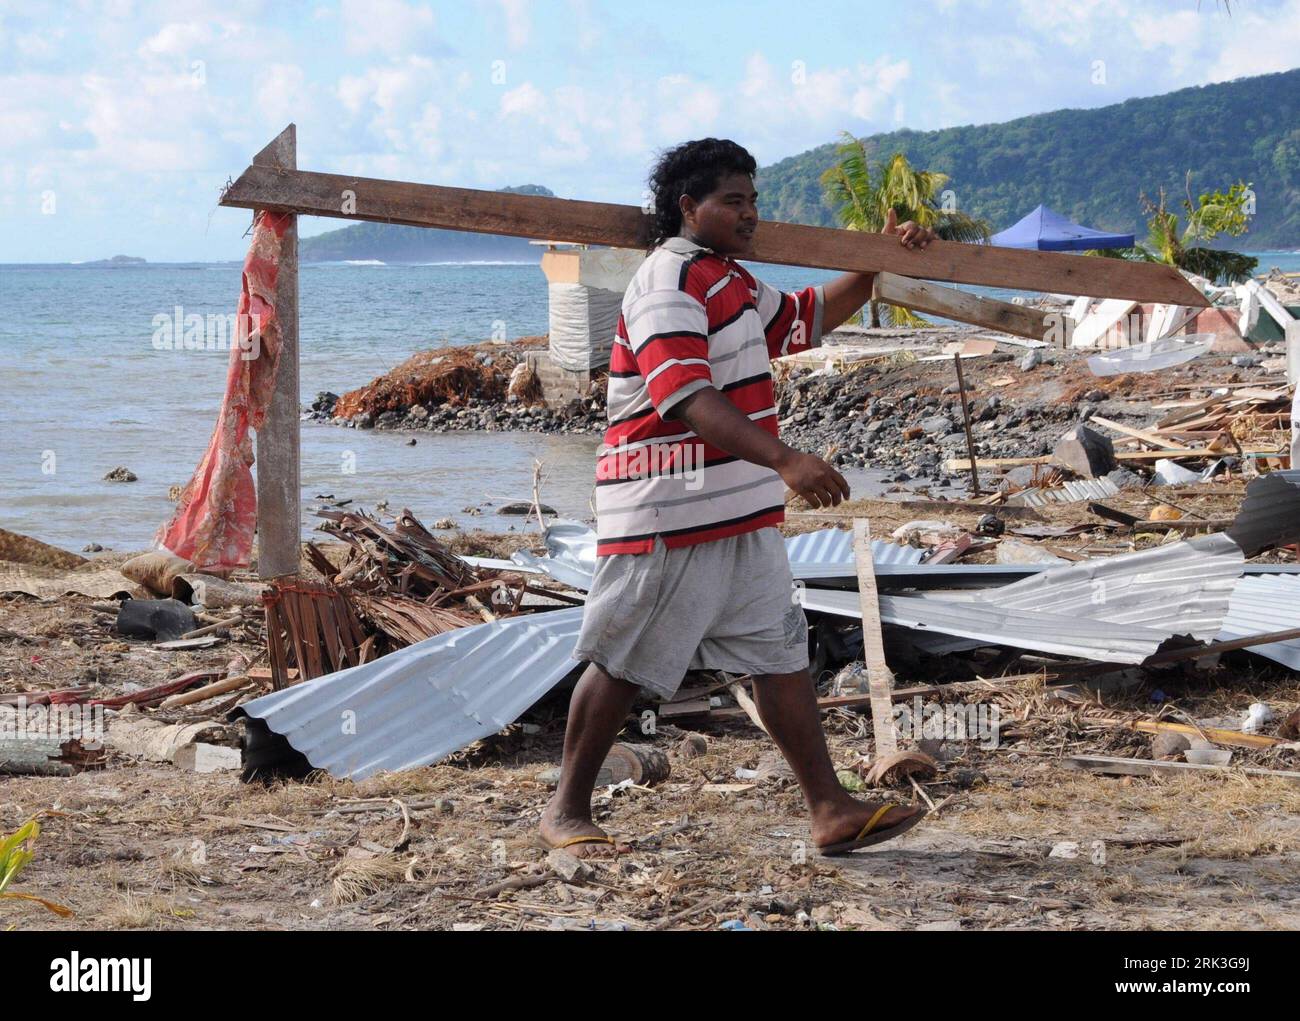 Bildnummer: 53506510  Datum: 03.10.2009  Copyright: imago/Xinhua (091005) -- APIA, Oct. 5, 2009 (Xinhua) -- A victim cleans a beach in southeast Upolu Island, Samoa, Oct. 3, 2009. The confirmed combined death toll for the tsunami in Samoa, American Samoa and the northern Isles of Tonga is 176, 135 of them in Samoa. Rescuing work has been fully carried out. (Xinhua/Liu Jieqiu) (zhs) (3)SAMOA-EARTHQUAKE-RESCUE PUBLICATIONxNOTxINxCHN Samoa Apia Erdbeben Naturkatastrophen kbdig xub 2009 quer  o0 Opfer, Erdbebenopfer, Aufräumarbeiten    Bildnummer 53506510 Date 03 10 2009 Copyright Imago XINHUA  Ap Stock Photo